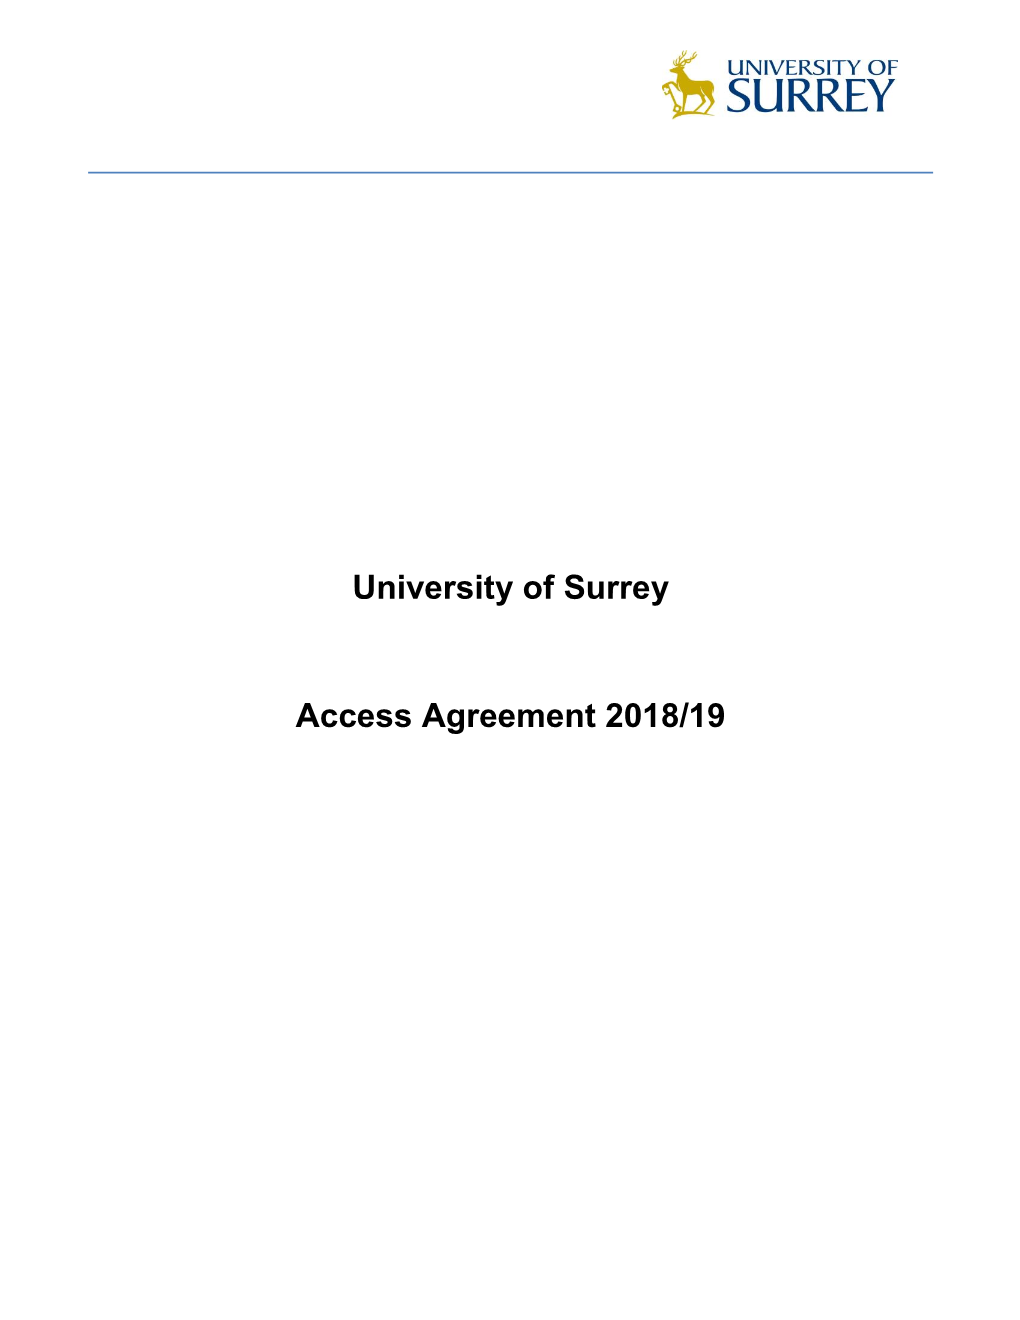 Uni of Surrey Access Agreement 2016